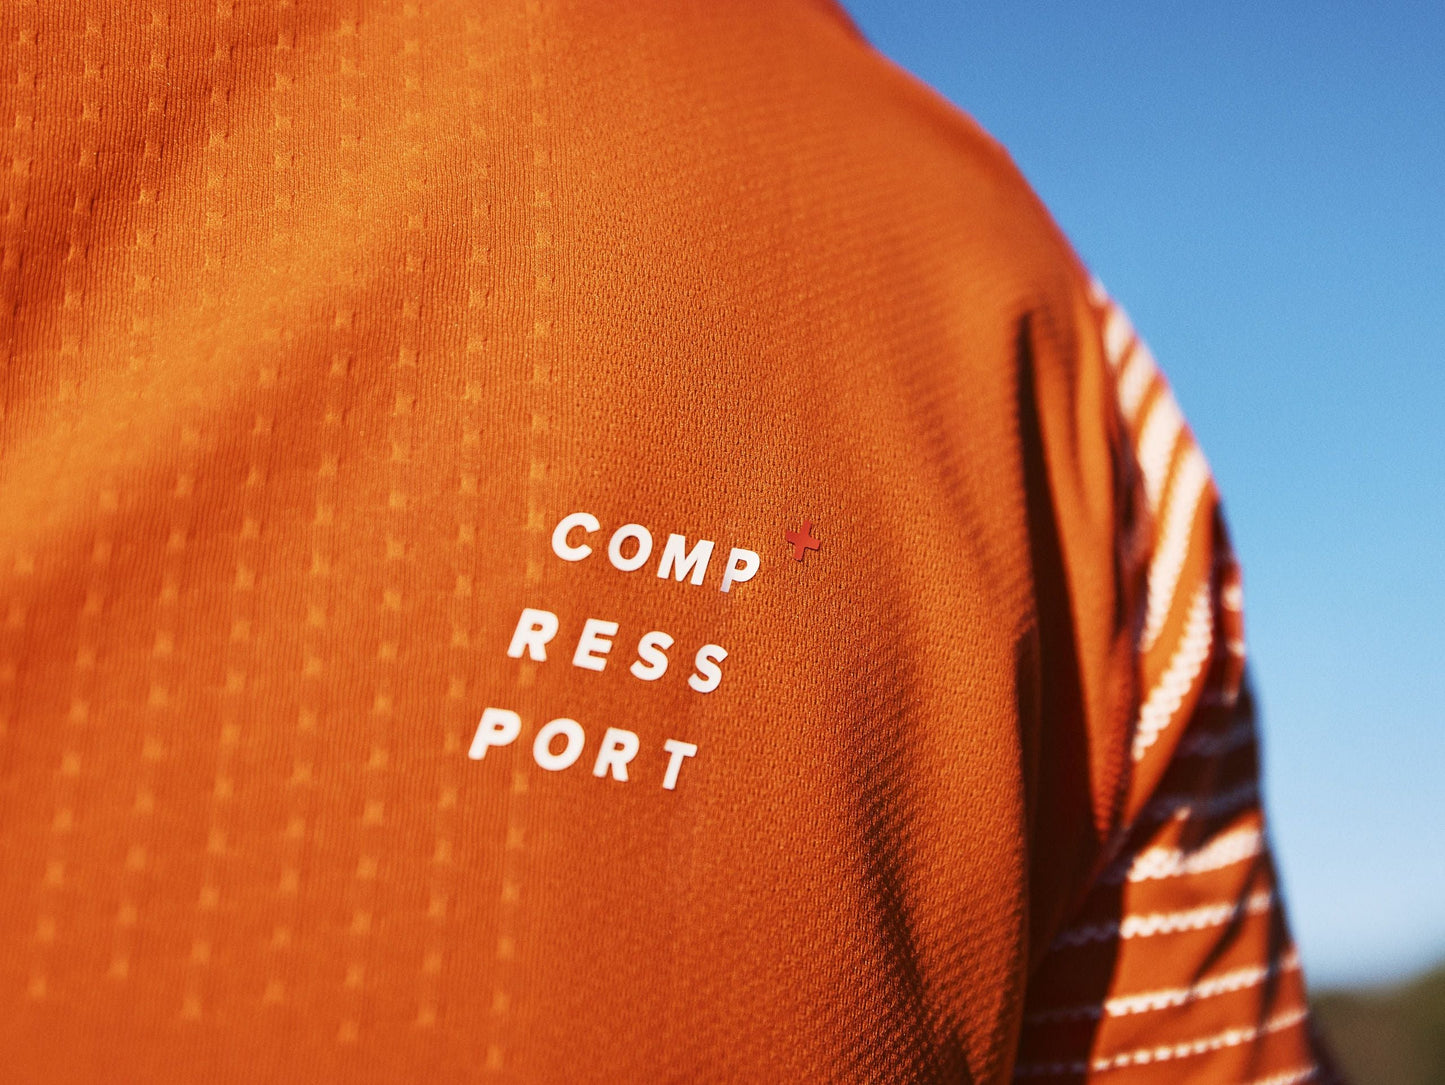 Compressport Men's Performance SS T-Shirt Orangeade/Fjord Blue - AM00127B_410